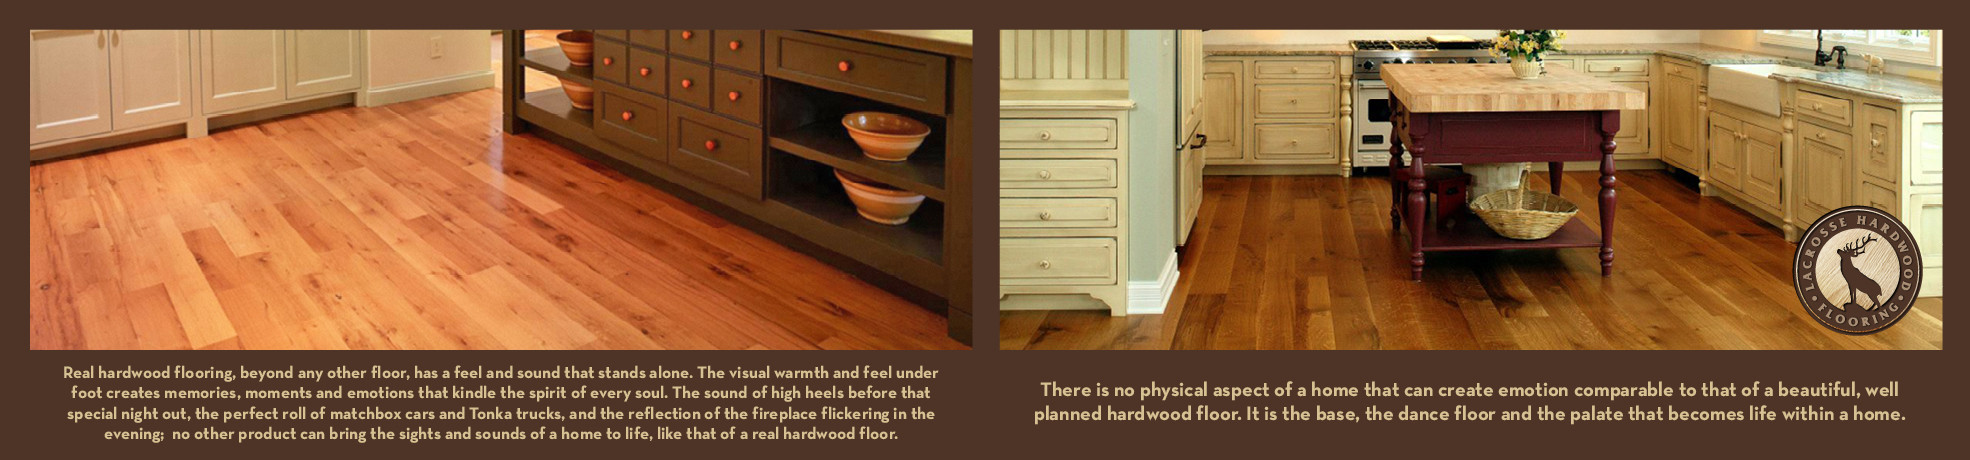 hardwood floor filler products of lacrosse hardwood flooring walnut white oak red oak hickory within lhfsliderv23